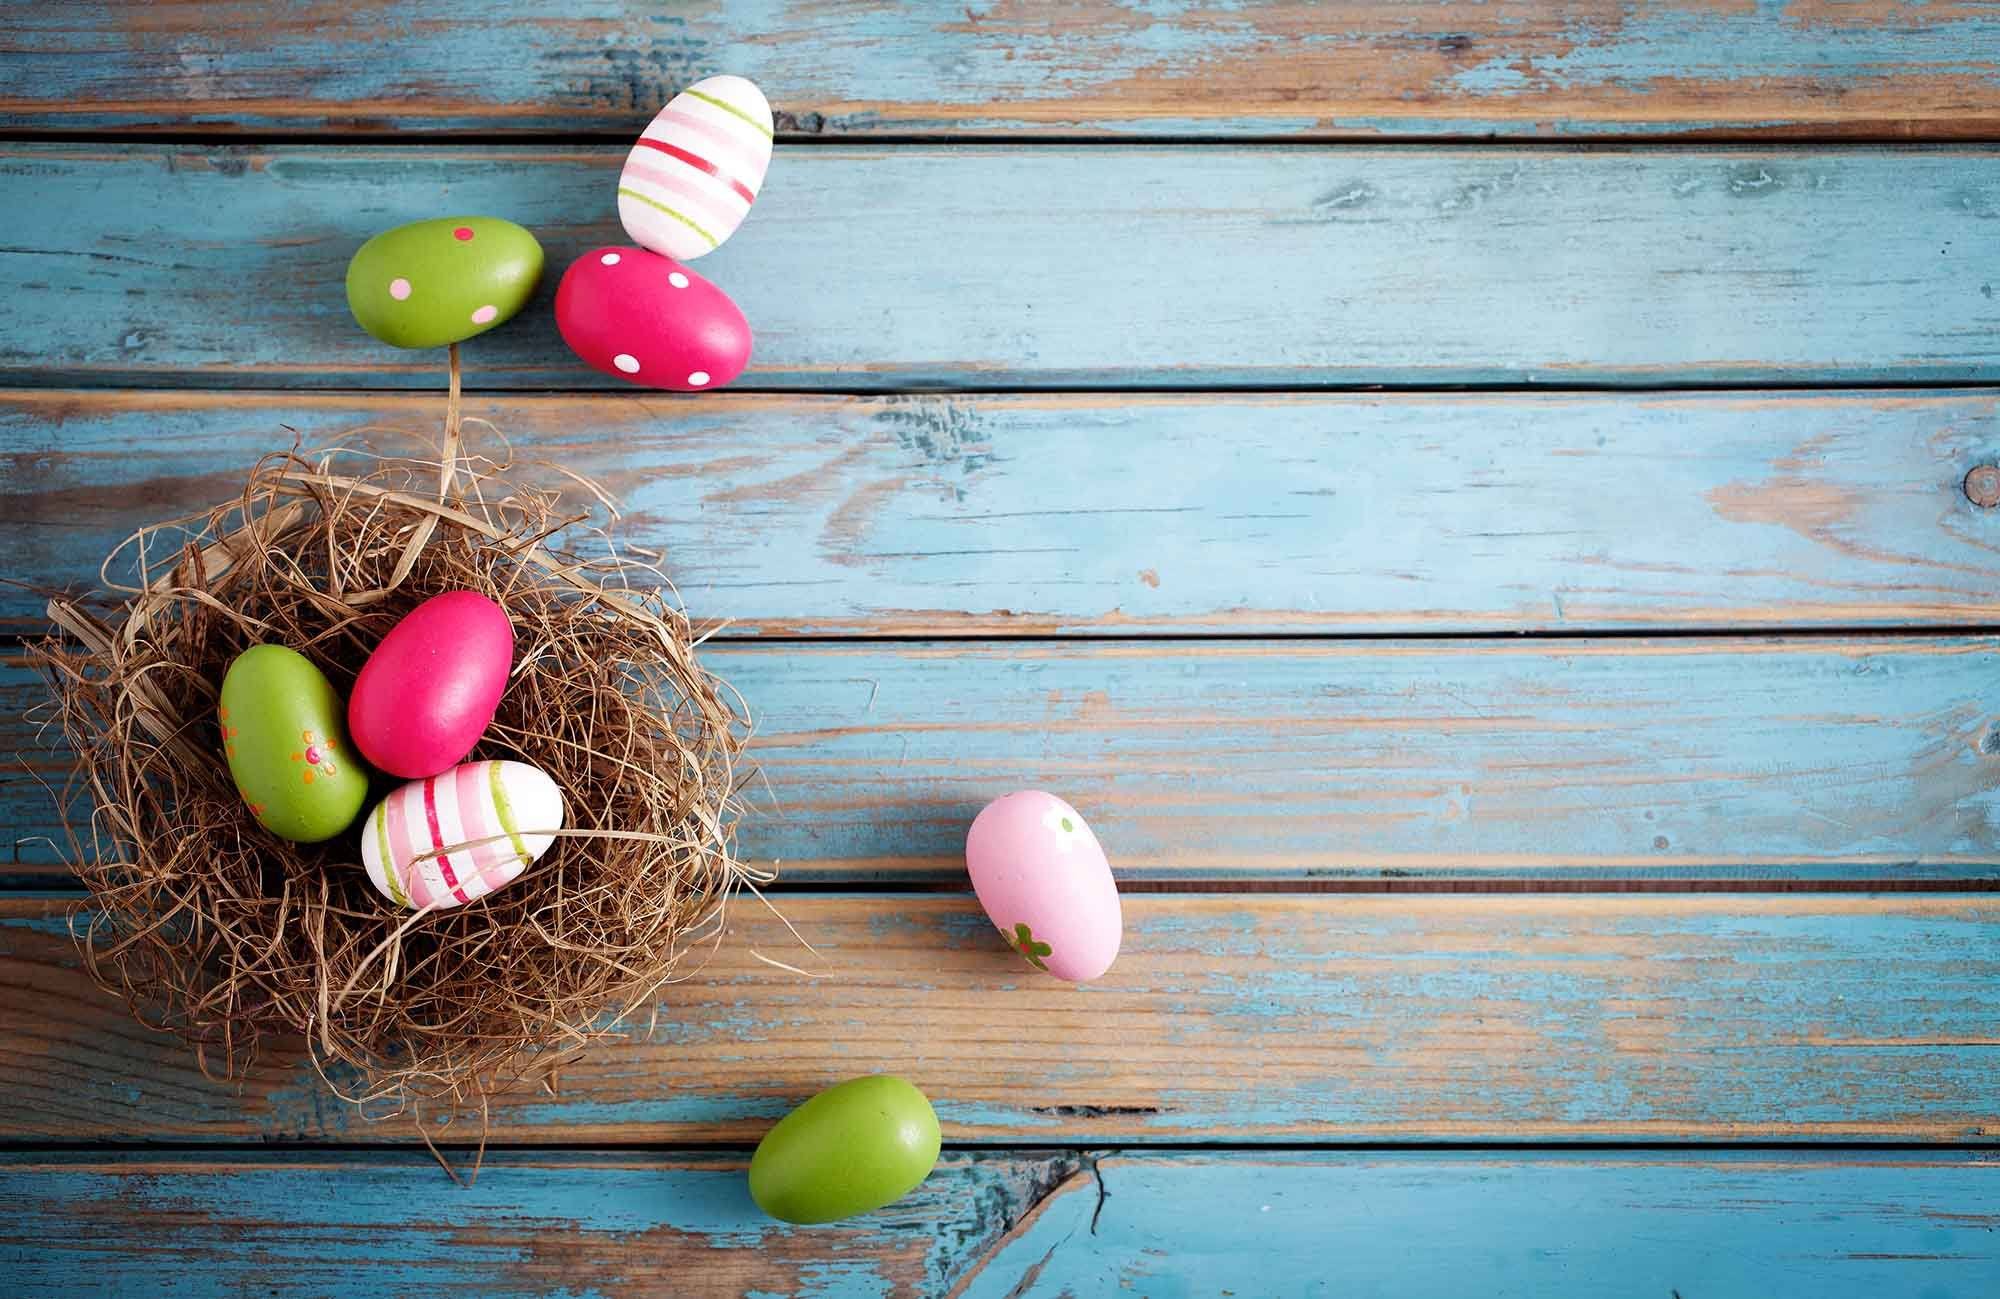 Colorful Easter Eggs On The Blue Wood Floor Backdrop Shopbackdrop